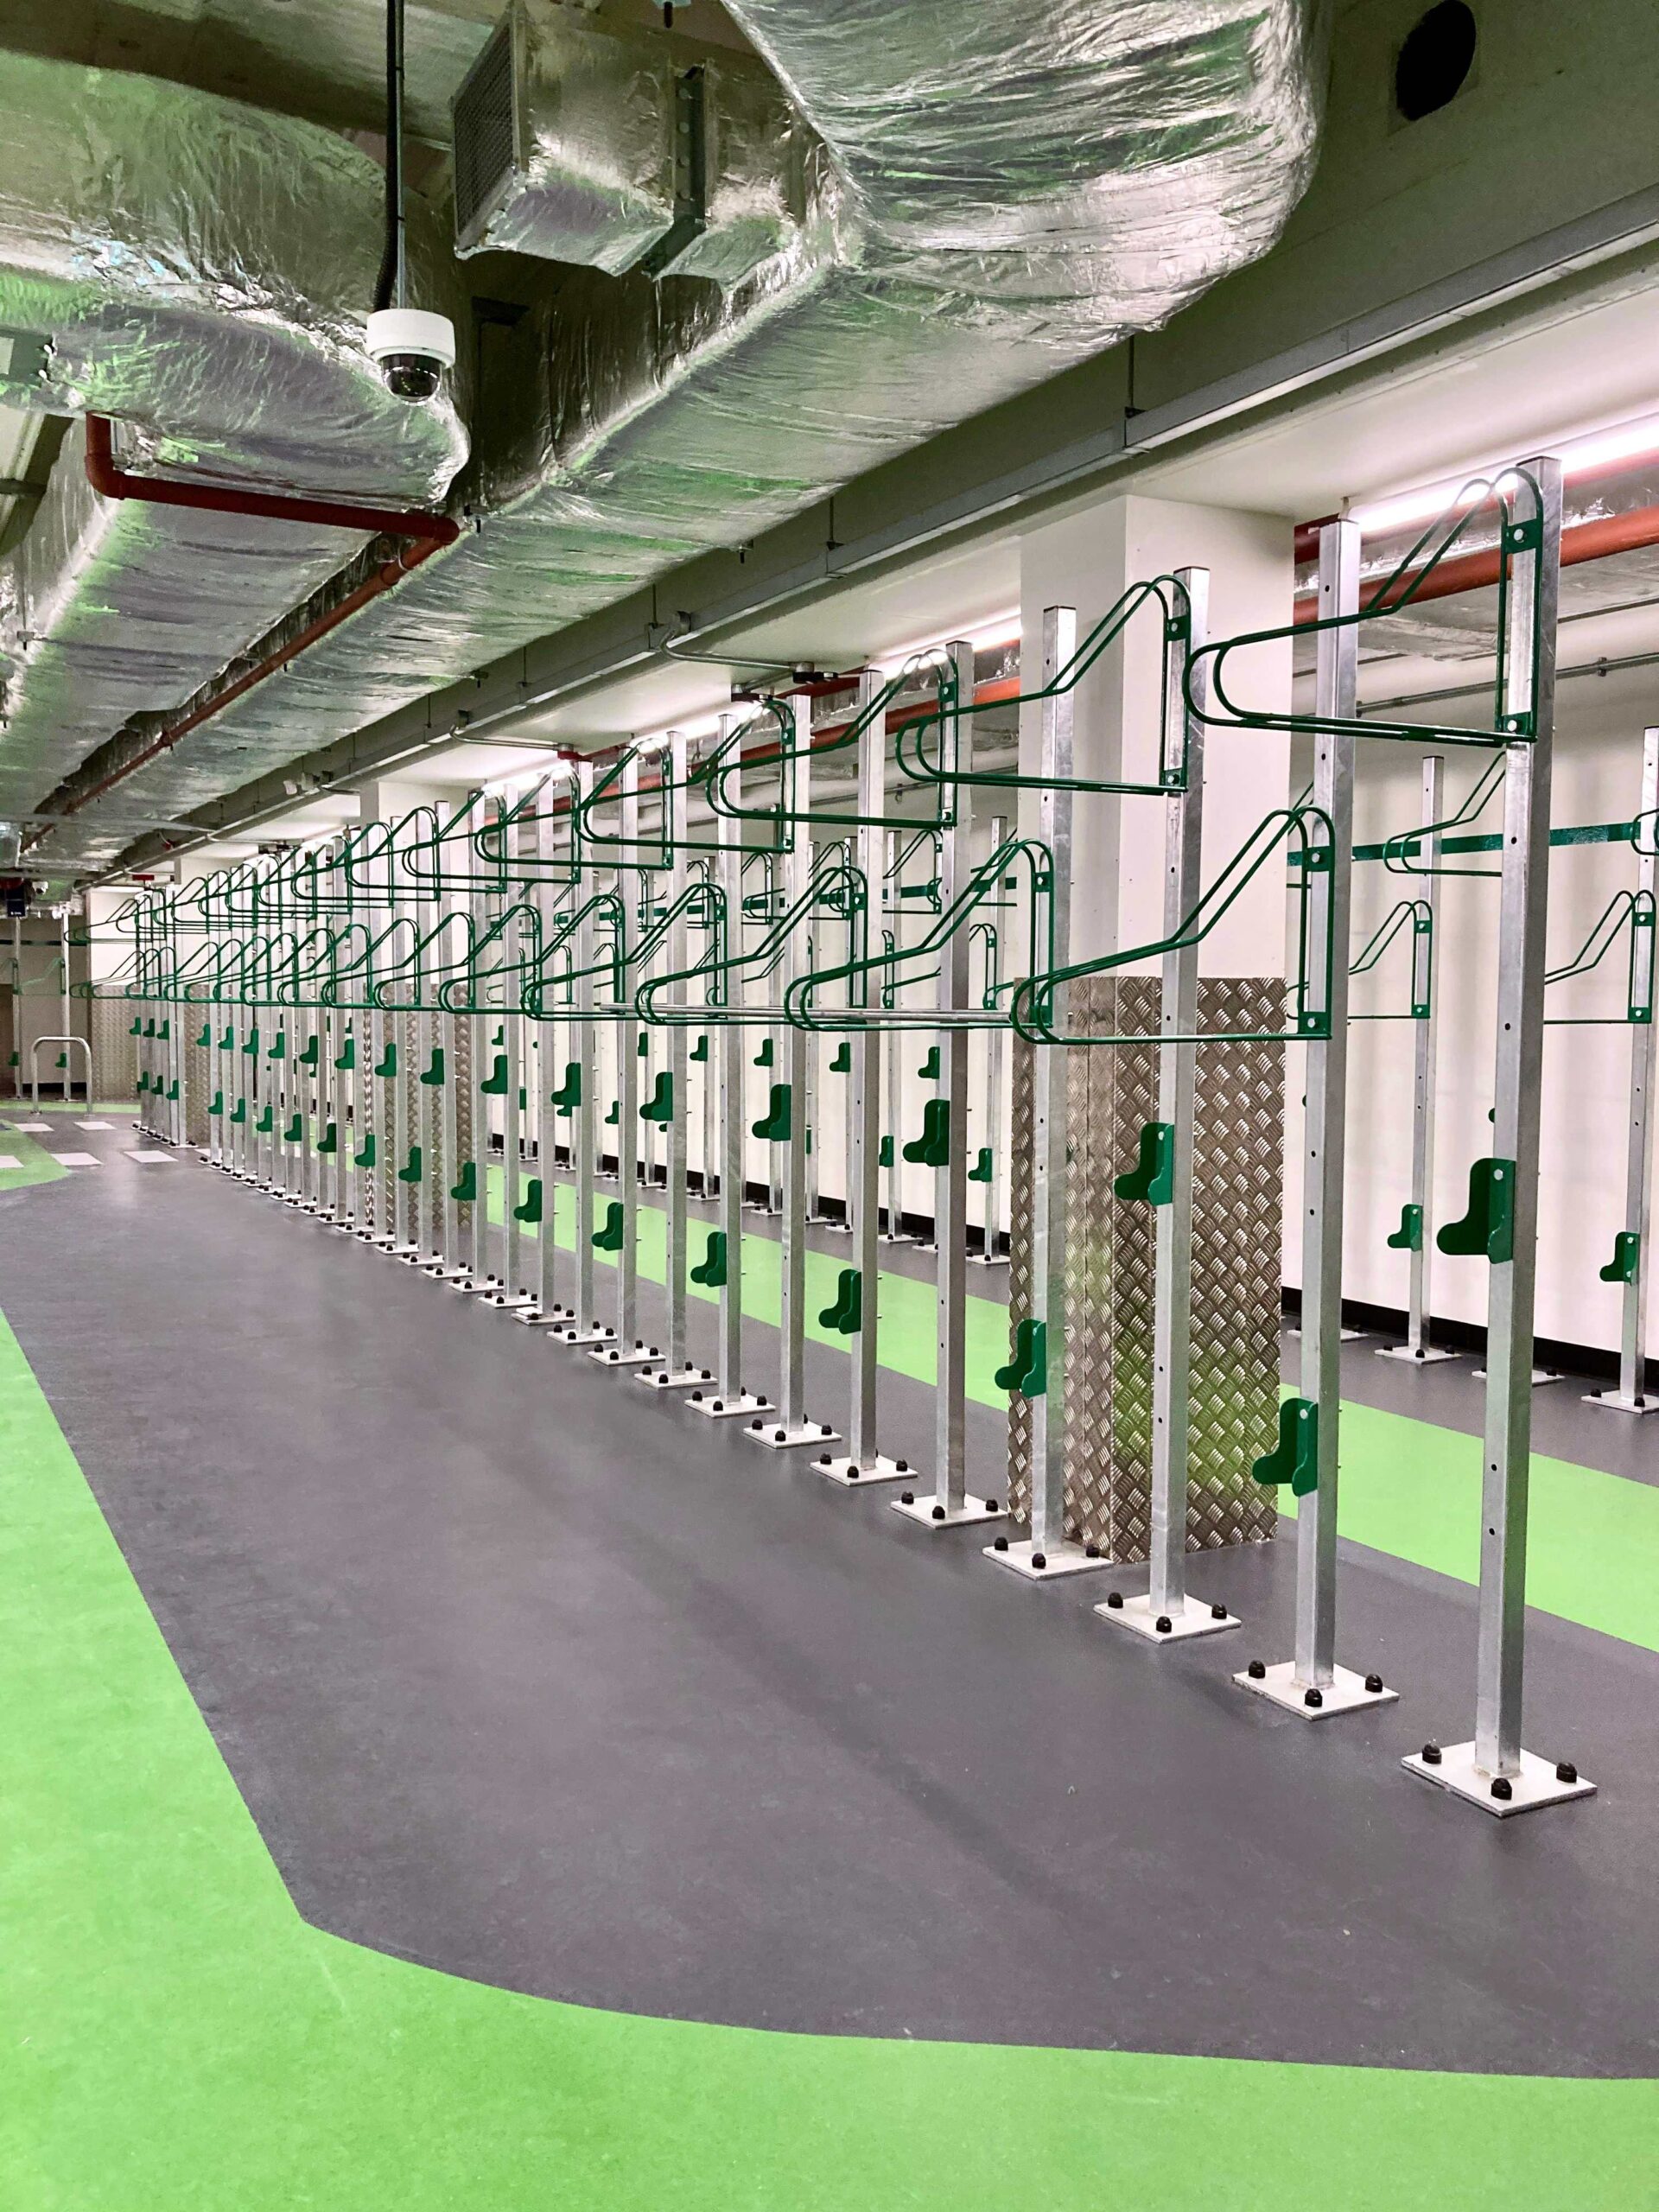 free standing vertical bike racks in an underground storage facilities